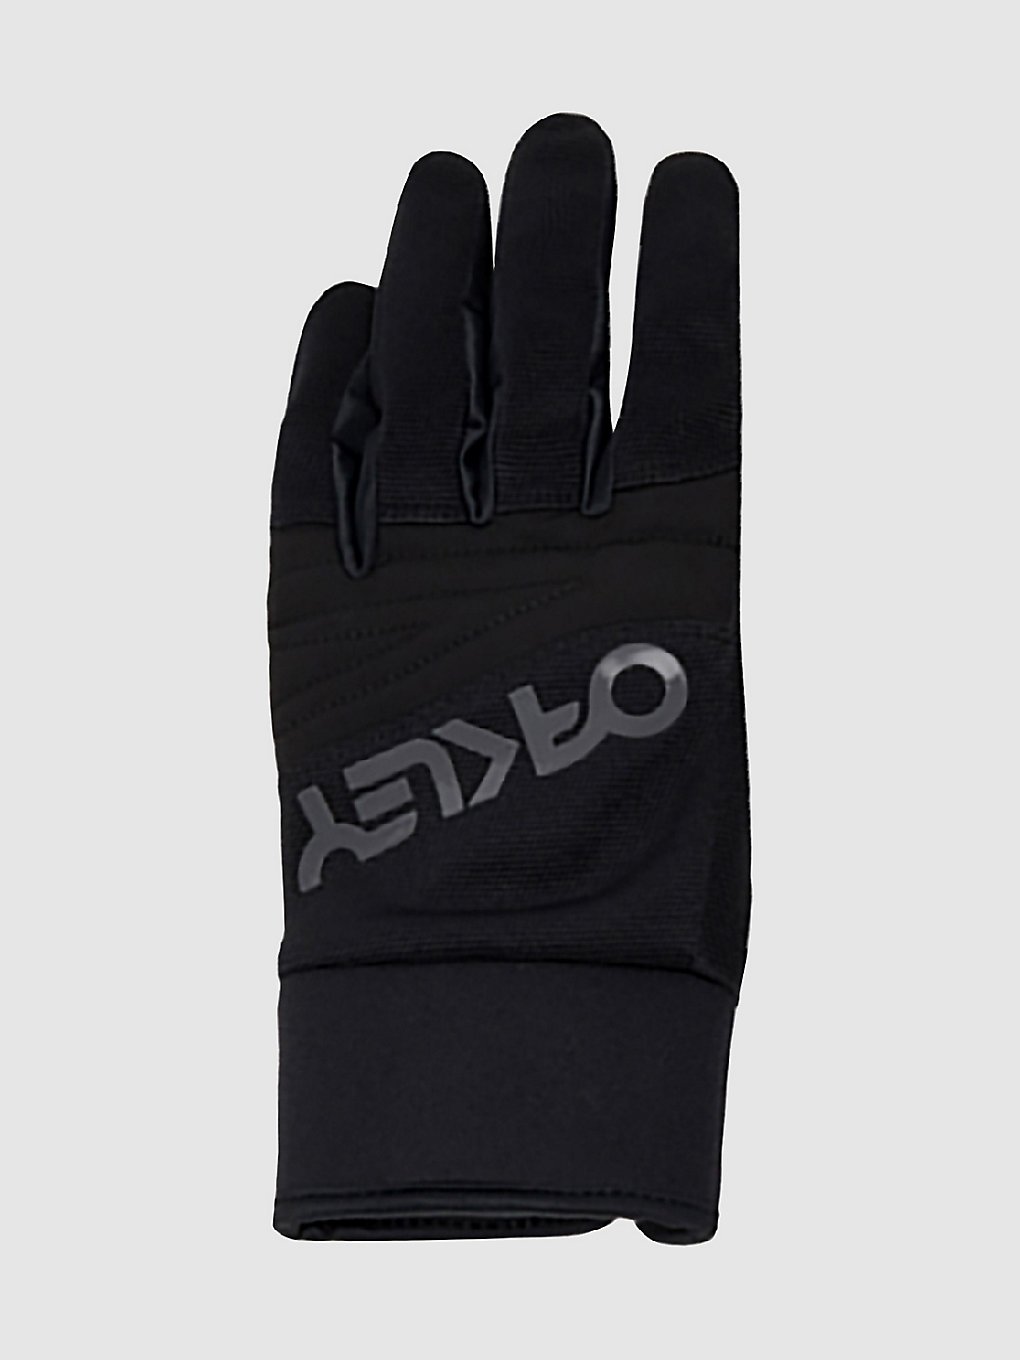 Oakley Factory Pilot Core Handschuhe blackout kaufen